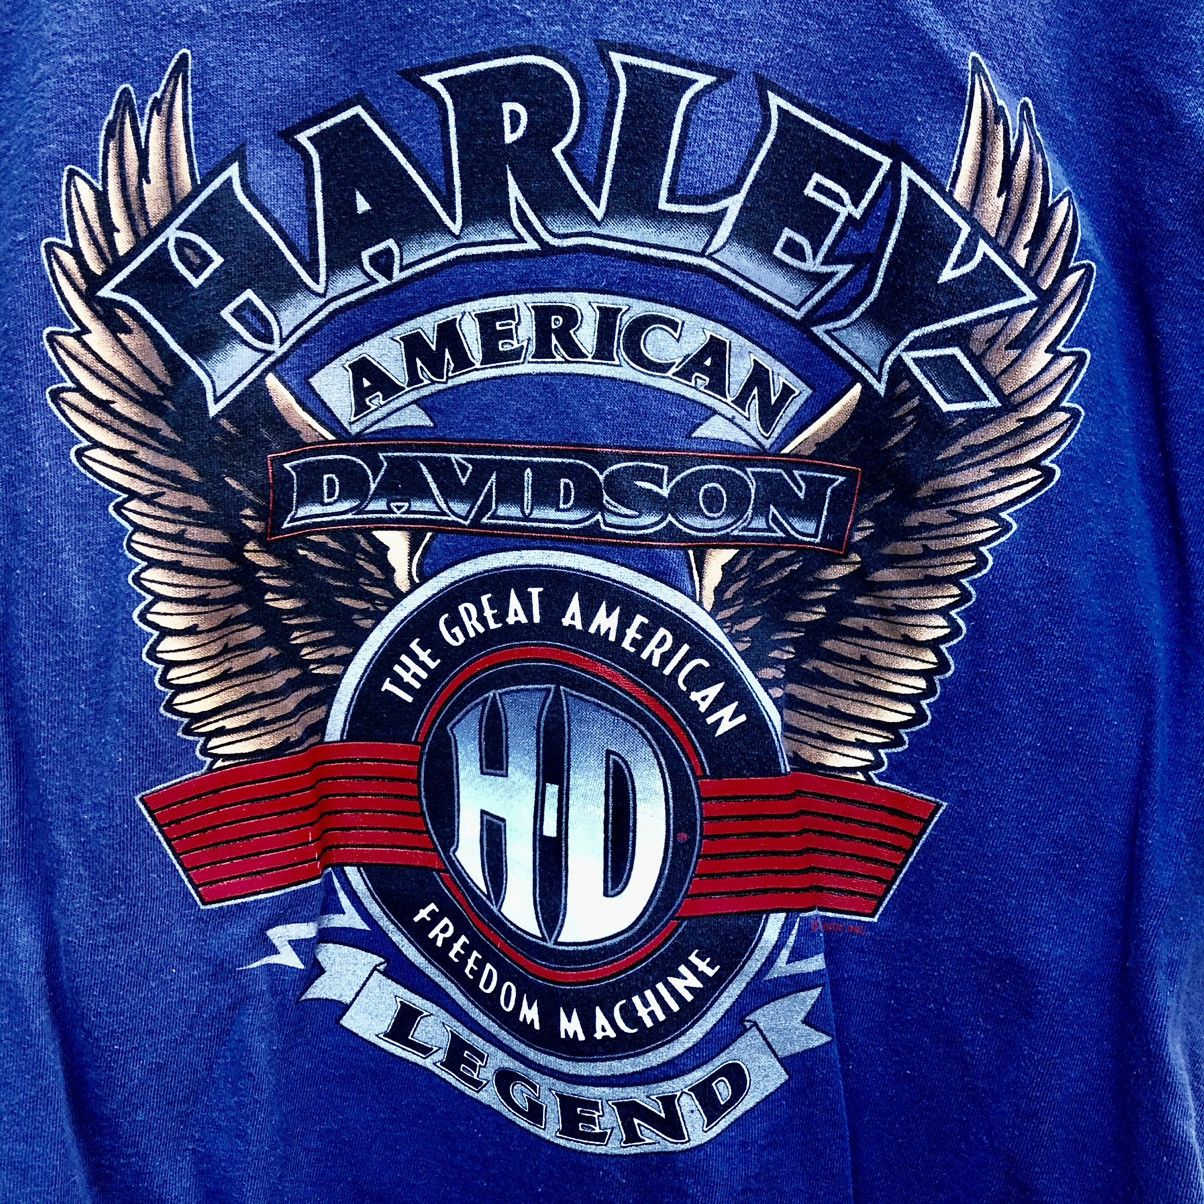 Harley Davidson vintage 1994 HARLEY American Freedom Machine tee shirt M Size US M / EU 48-50 / 2 - 1 Preview